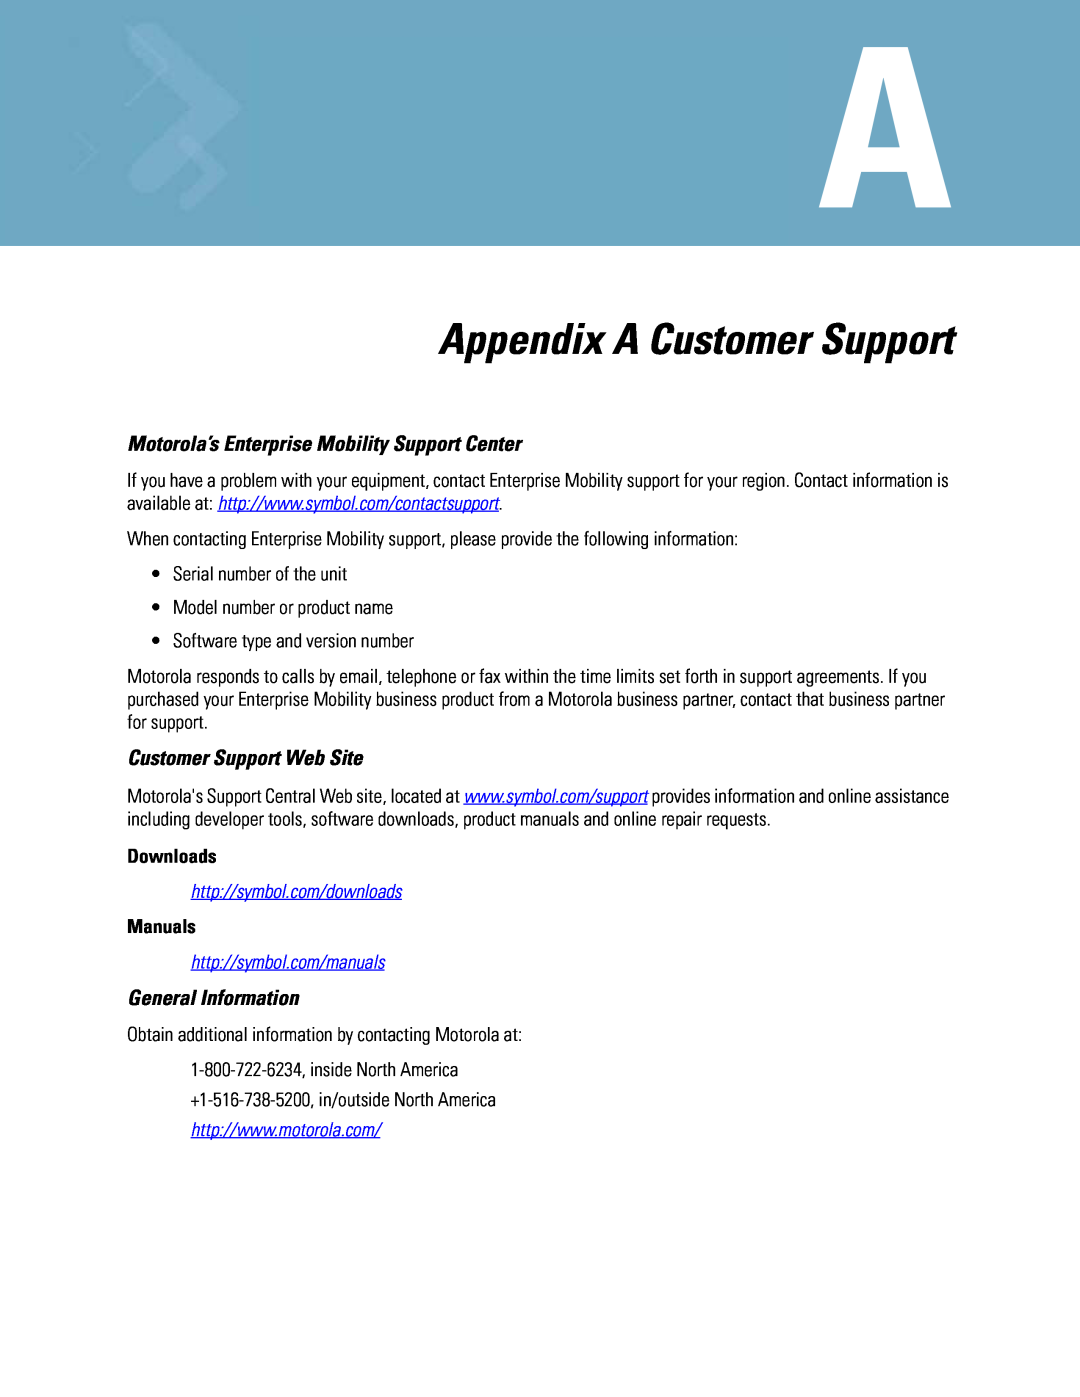 Motorola WS5100 Appendix A Customer Support, Motorola’s Enterprise Mobility Support Center, Customer Support Web Site 